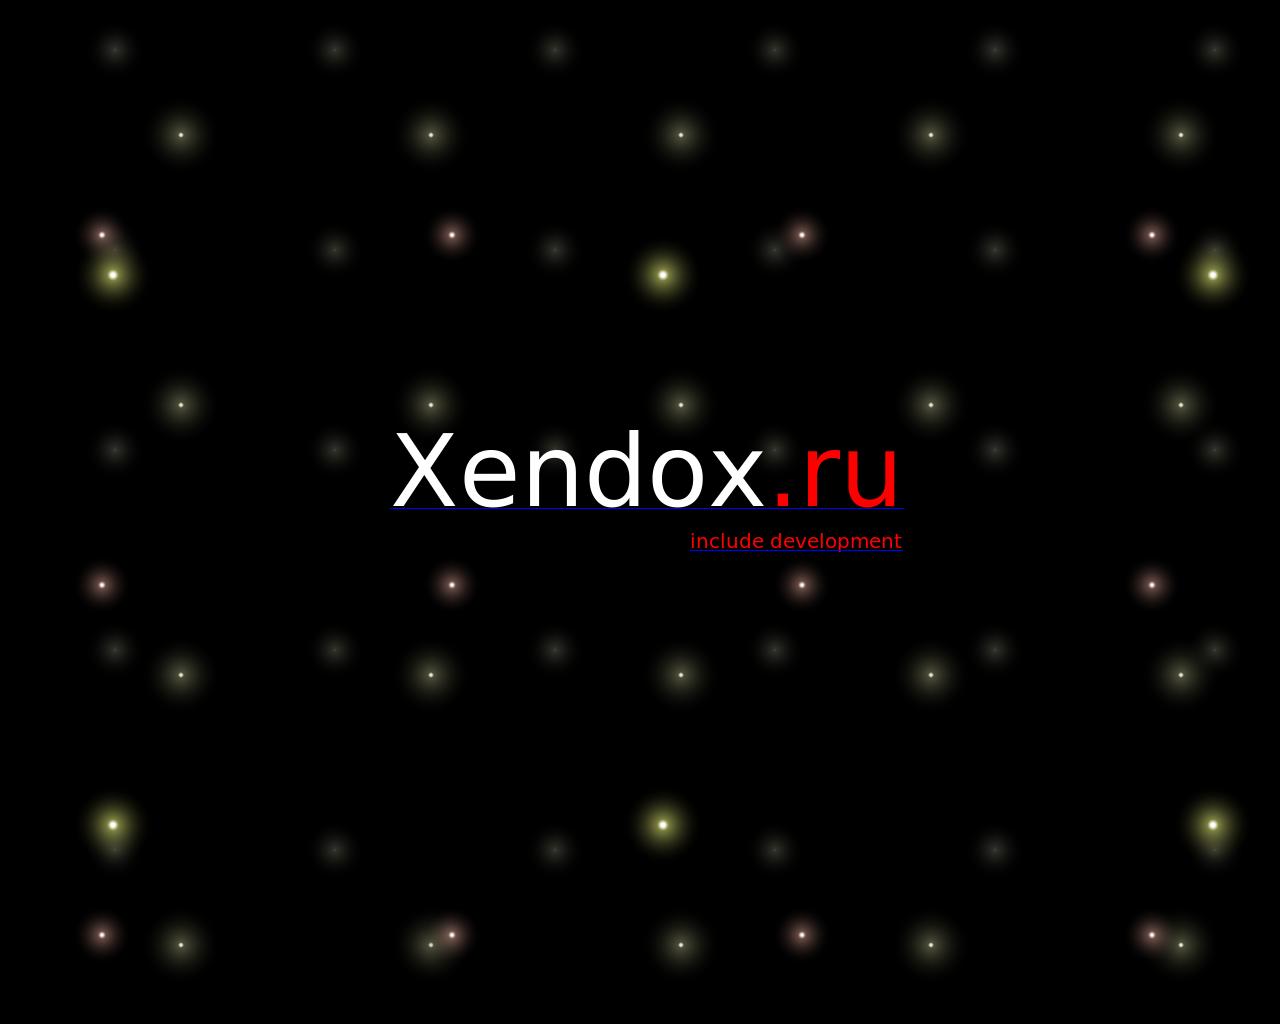 Изображение сайта xendox.ru в разрешении 1280x1024